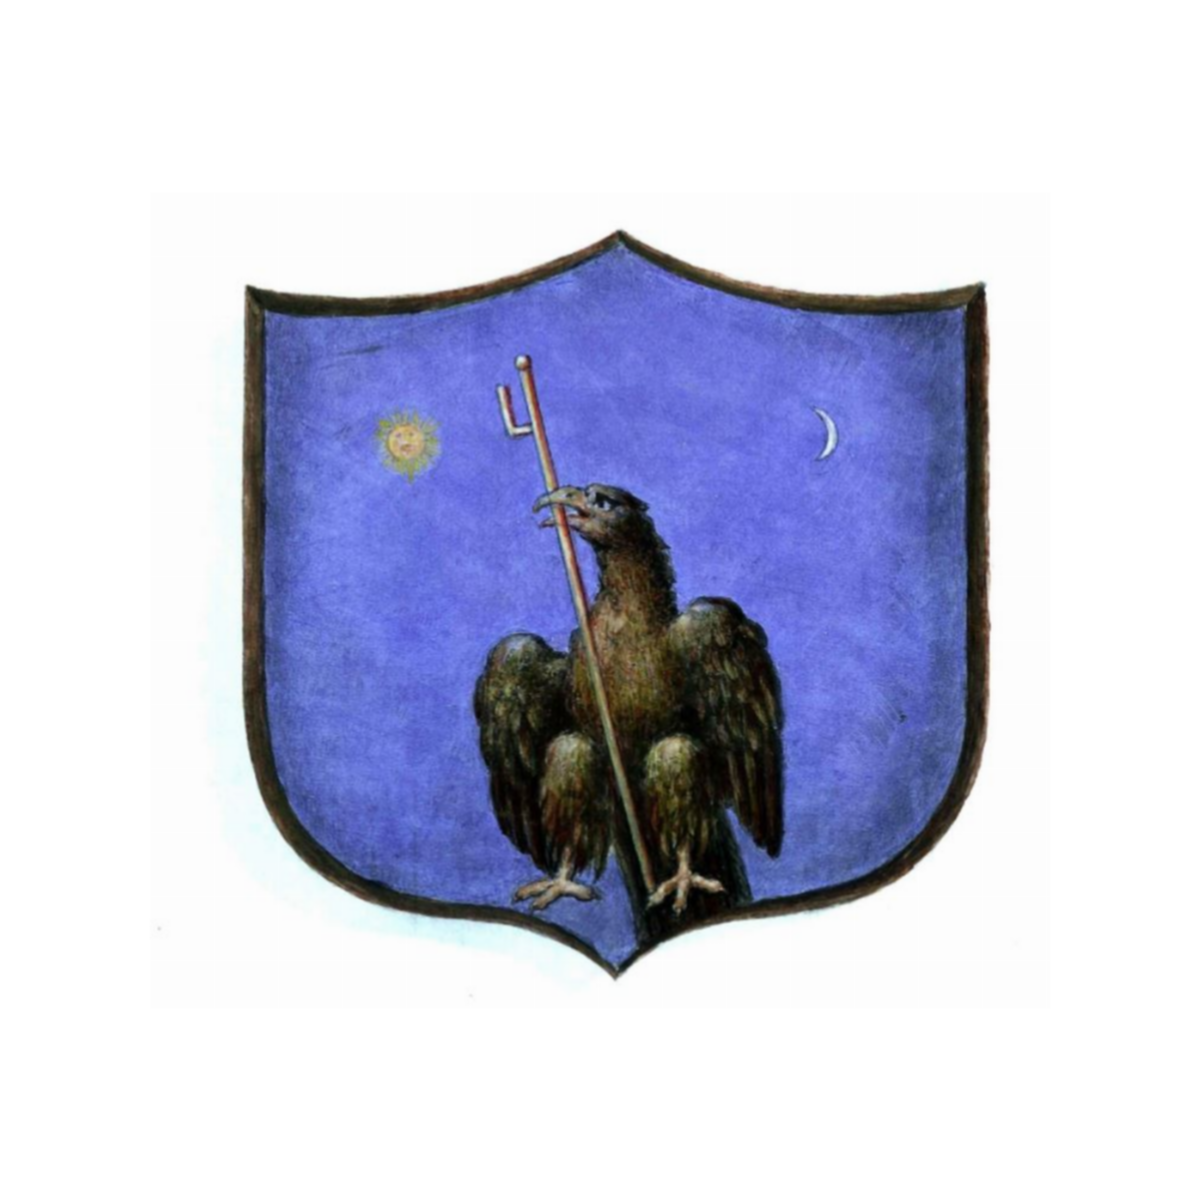 Wappen der FamiliePellegrini, de Pellegrini,Pellegrinelli,Pellegrinello,Pellegrini Trieste